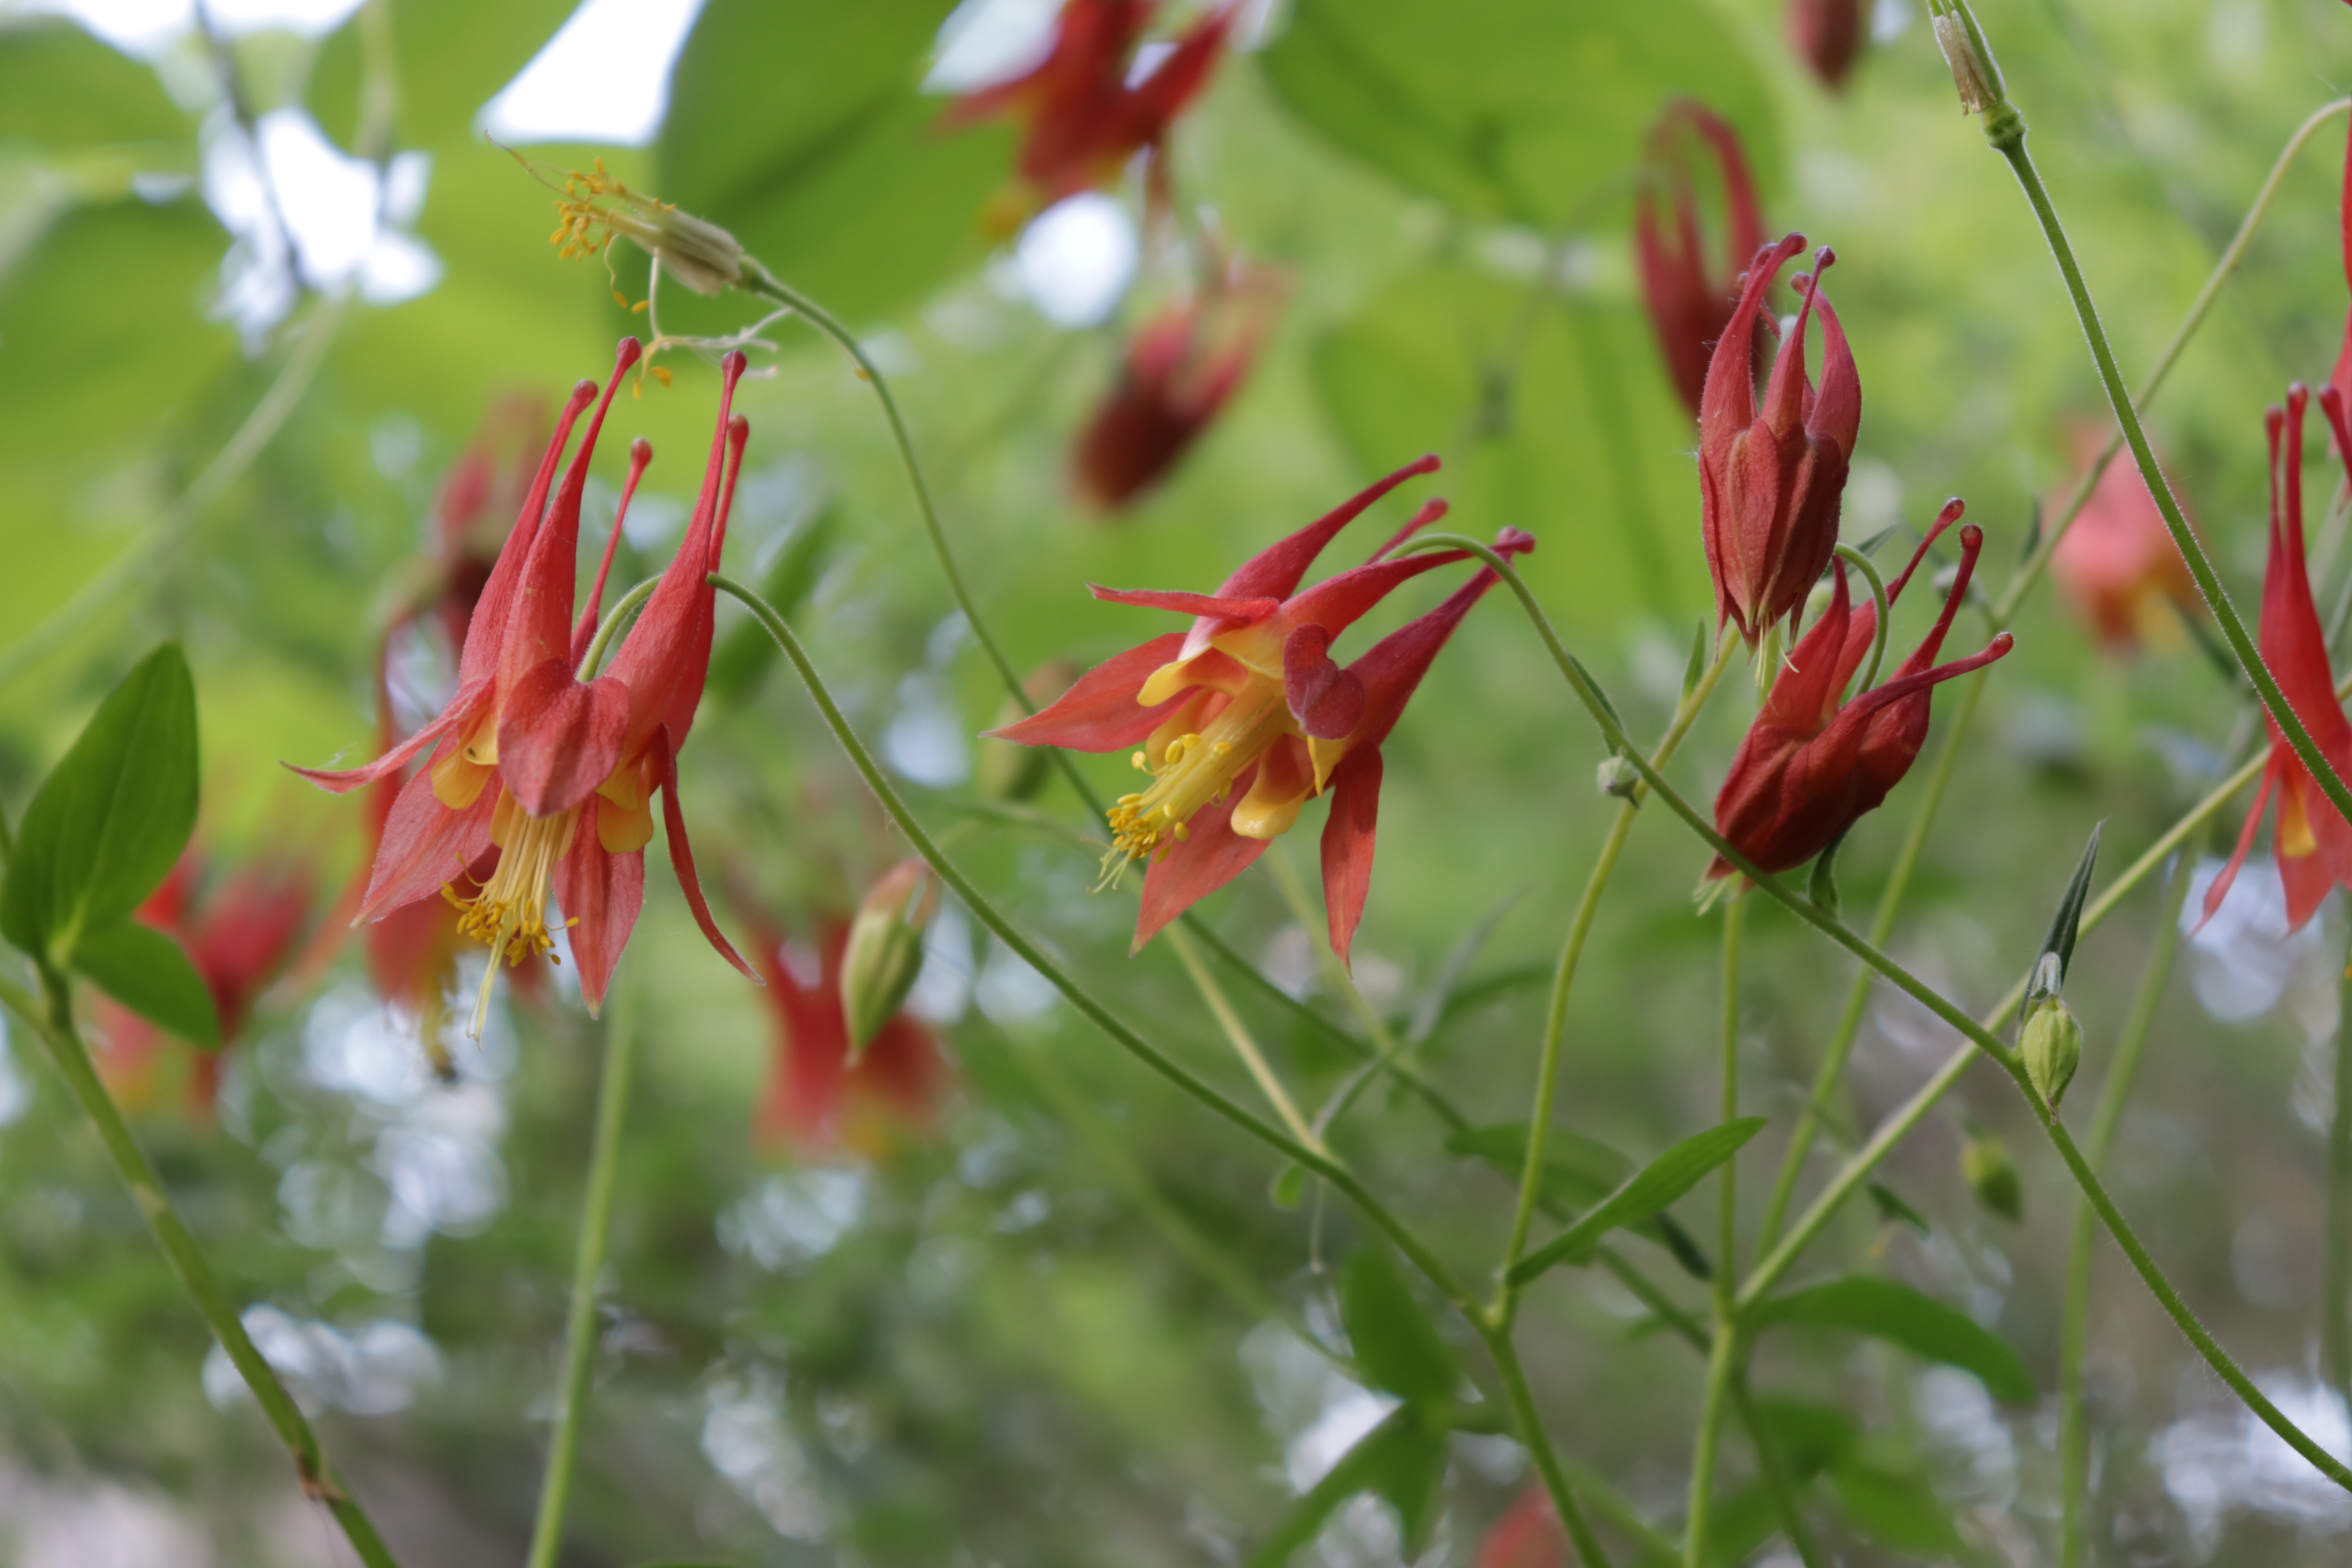 Image of Aquilegia canadensis, wild columbine, honeysuckle companion plant